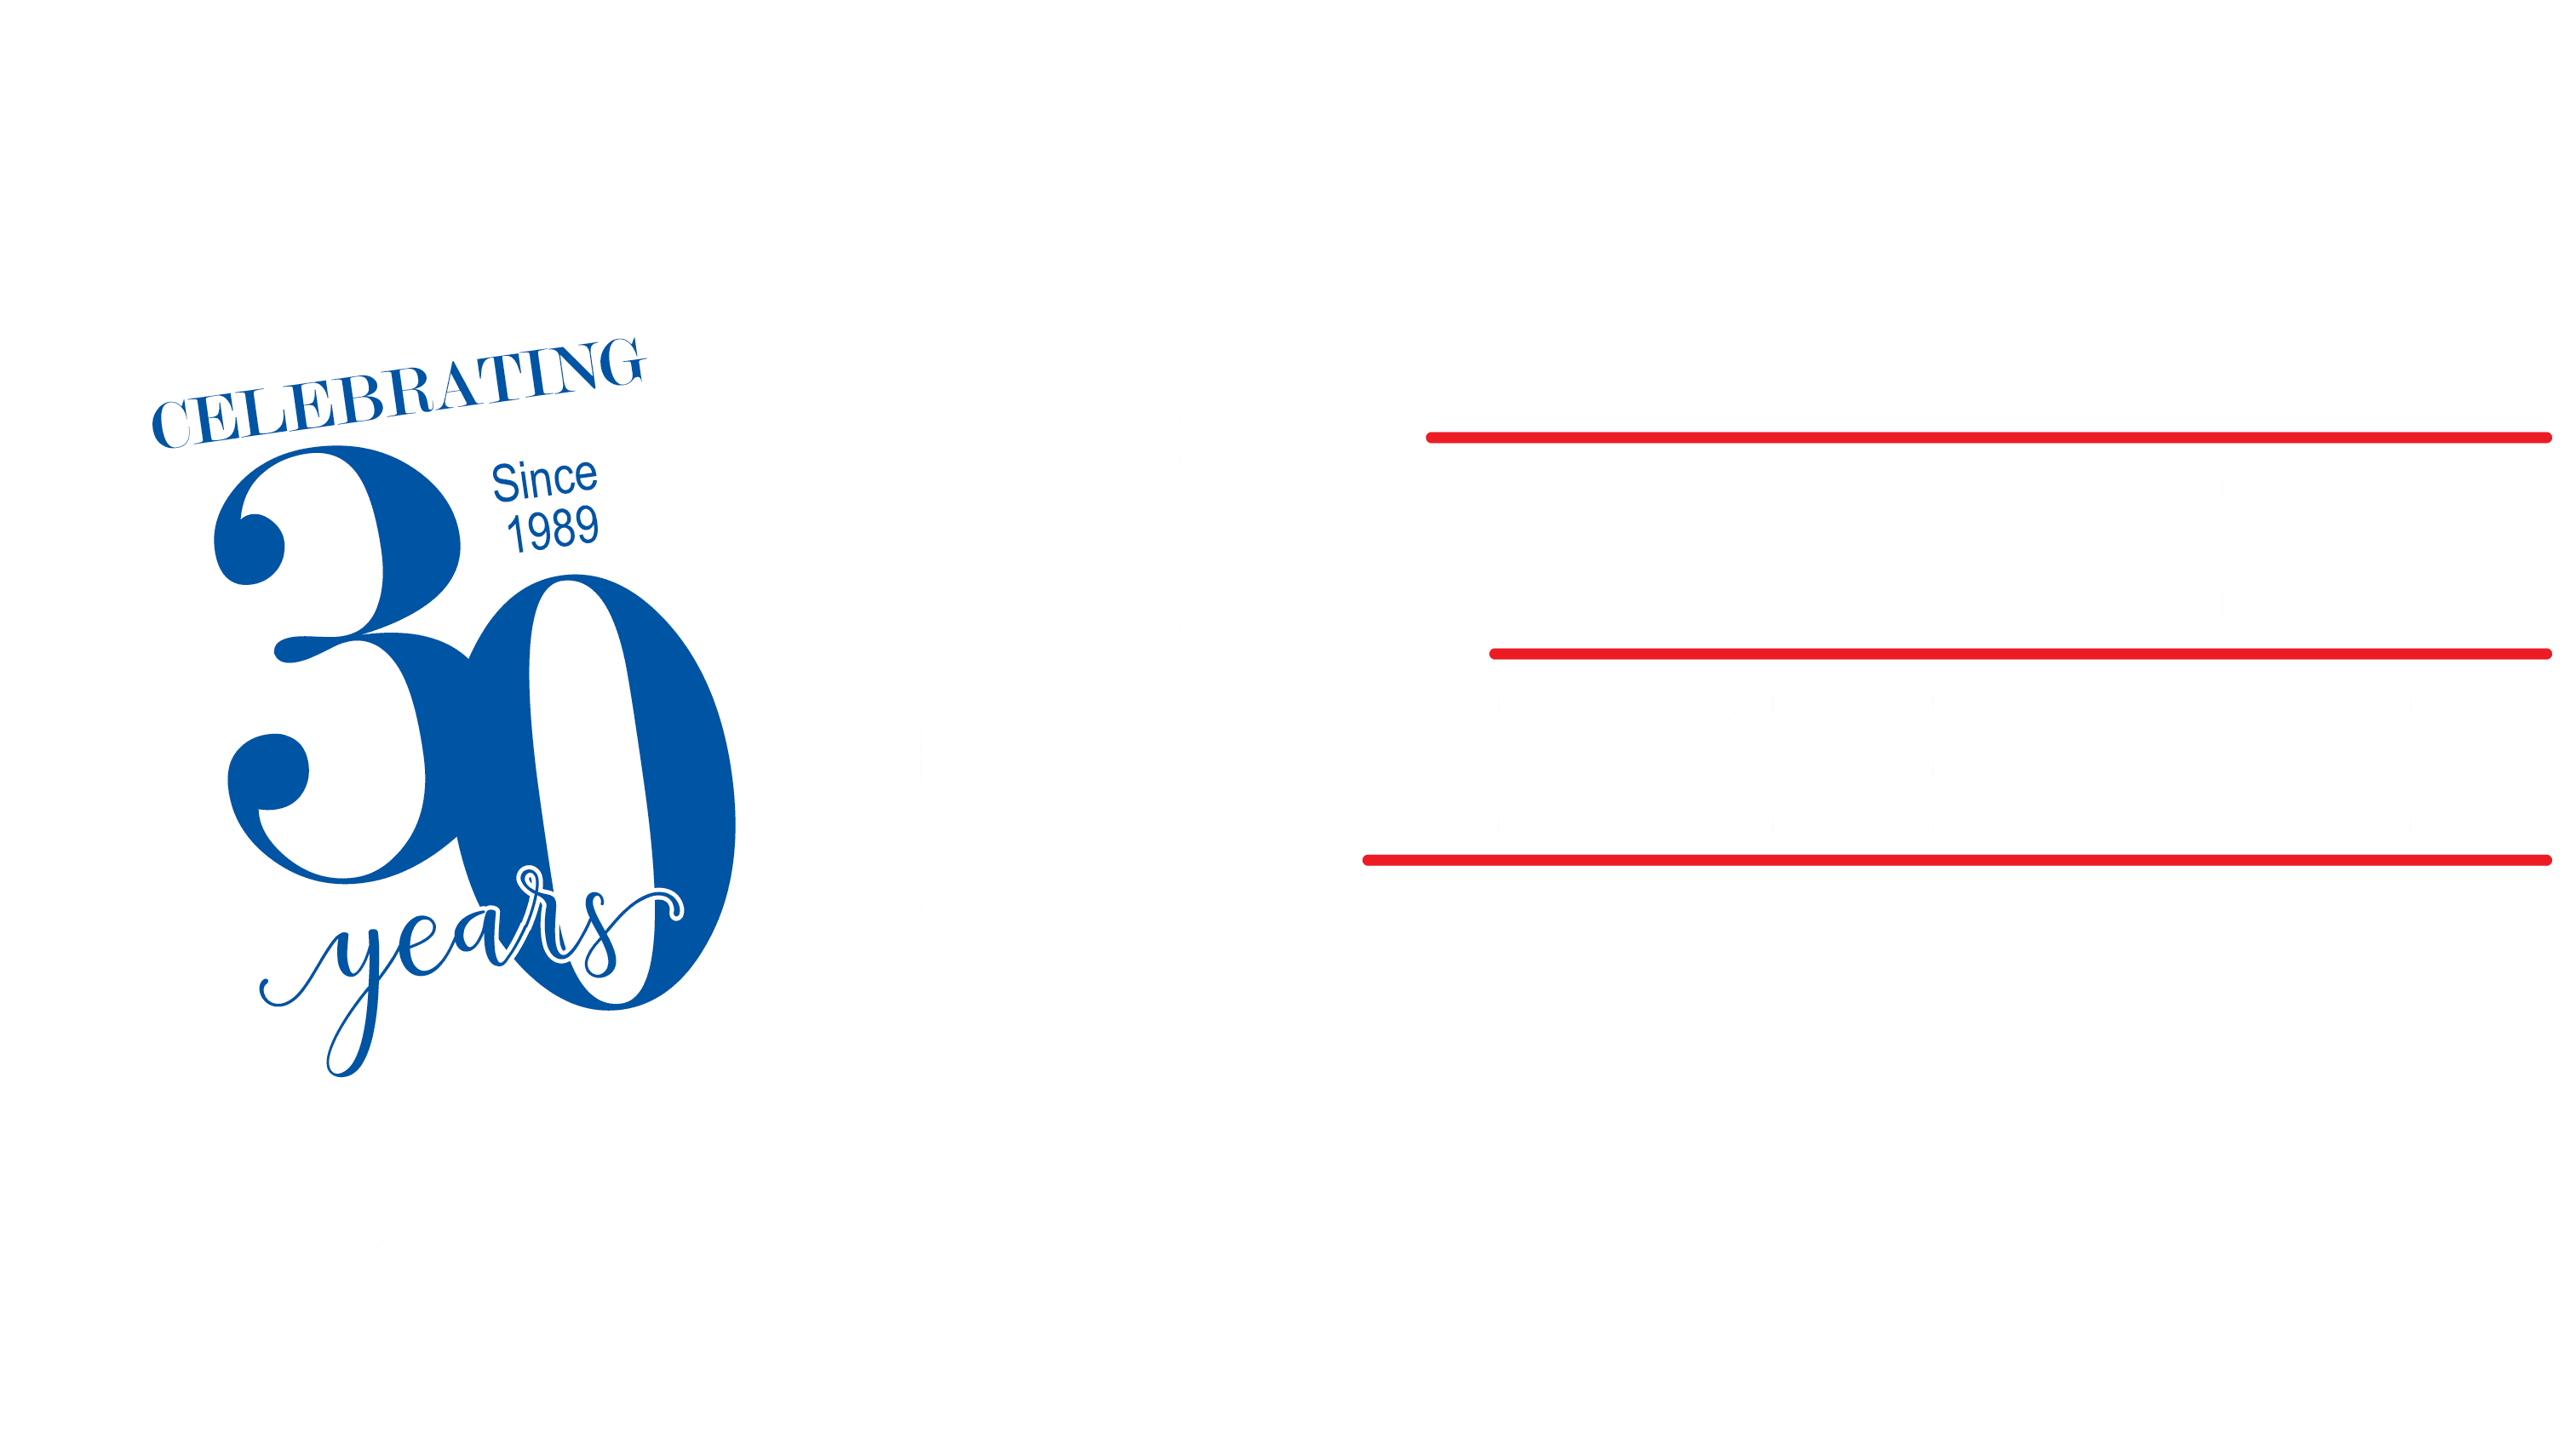 Peterson motors